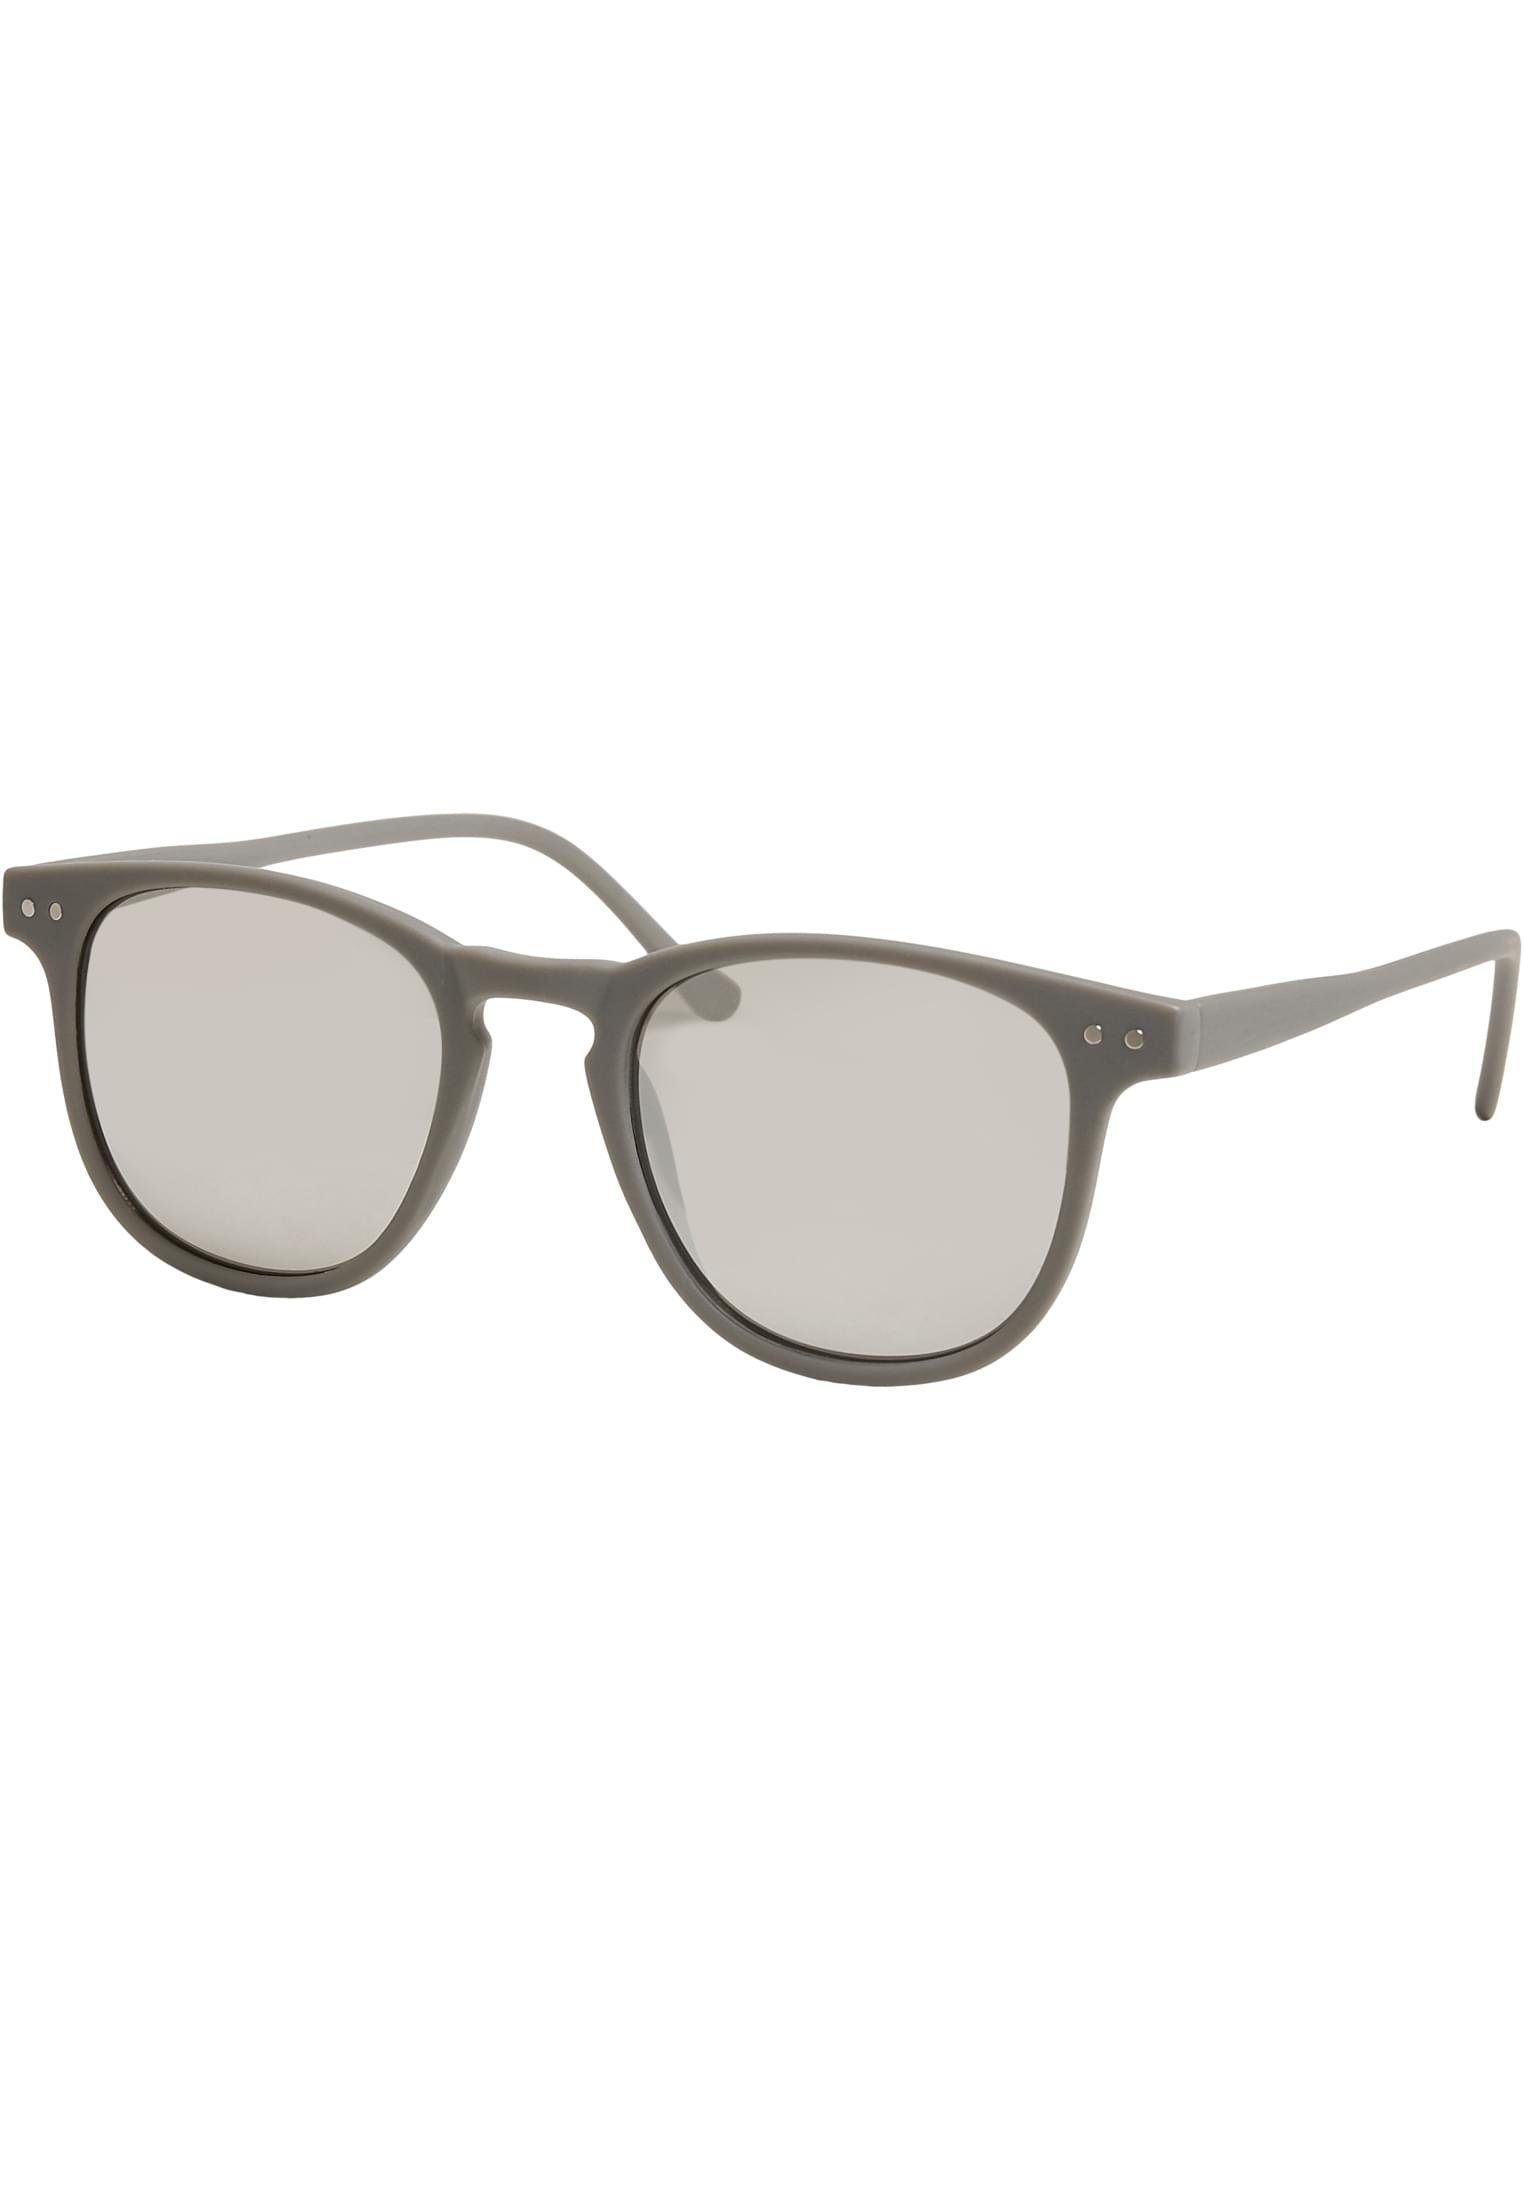 URBAN Unisex CLASSICS grey/silver Arthur Sonnenbrille with Chain Sunglasses